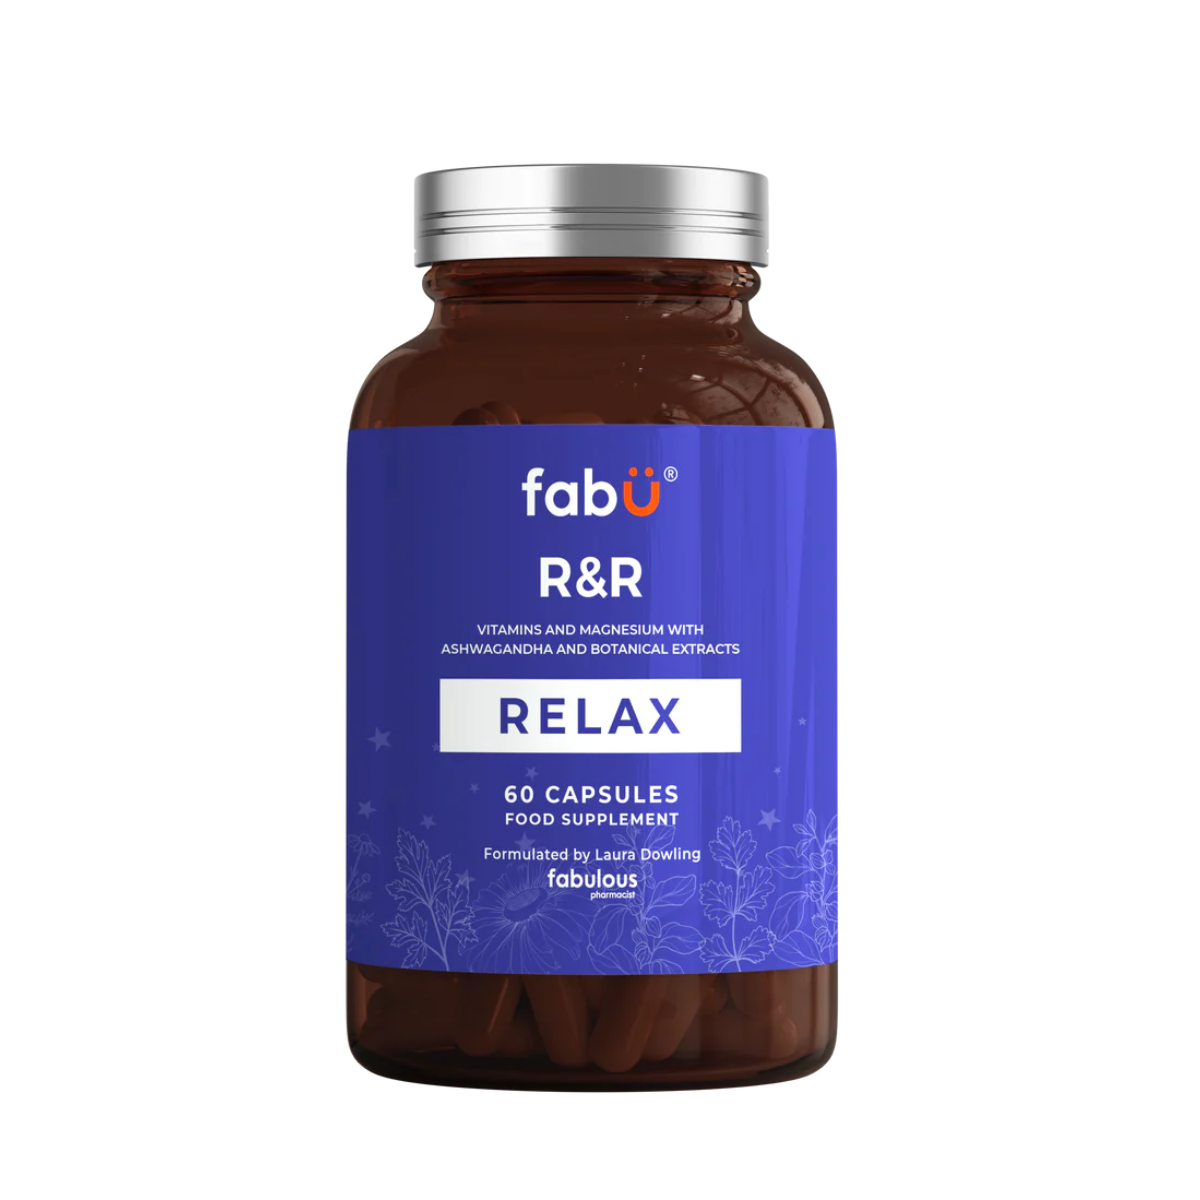 fabÜ R&R Relax